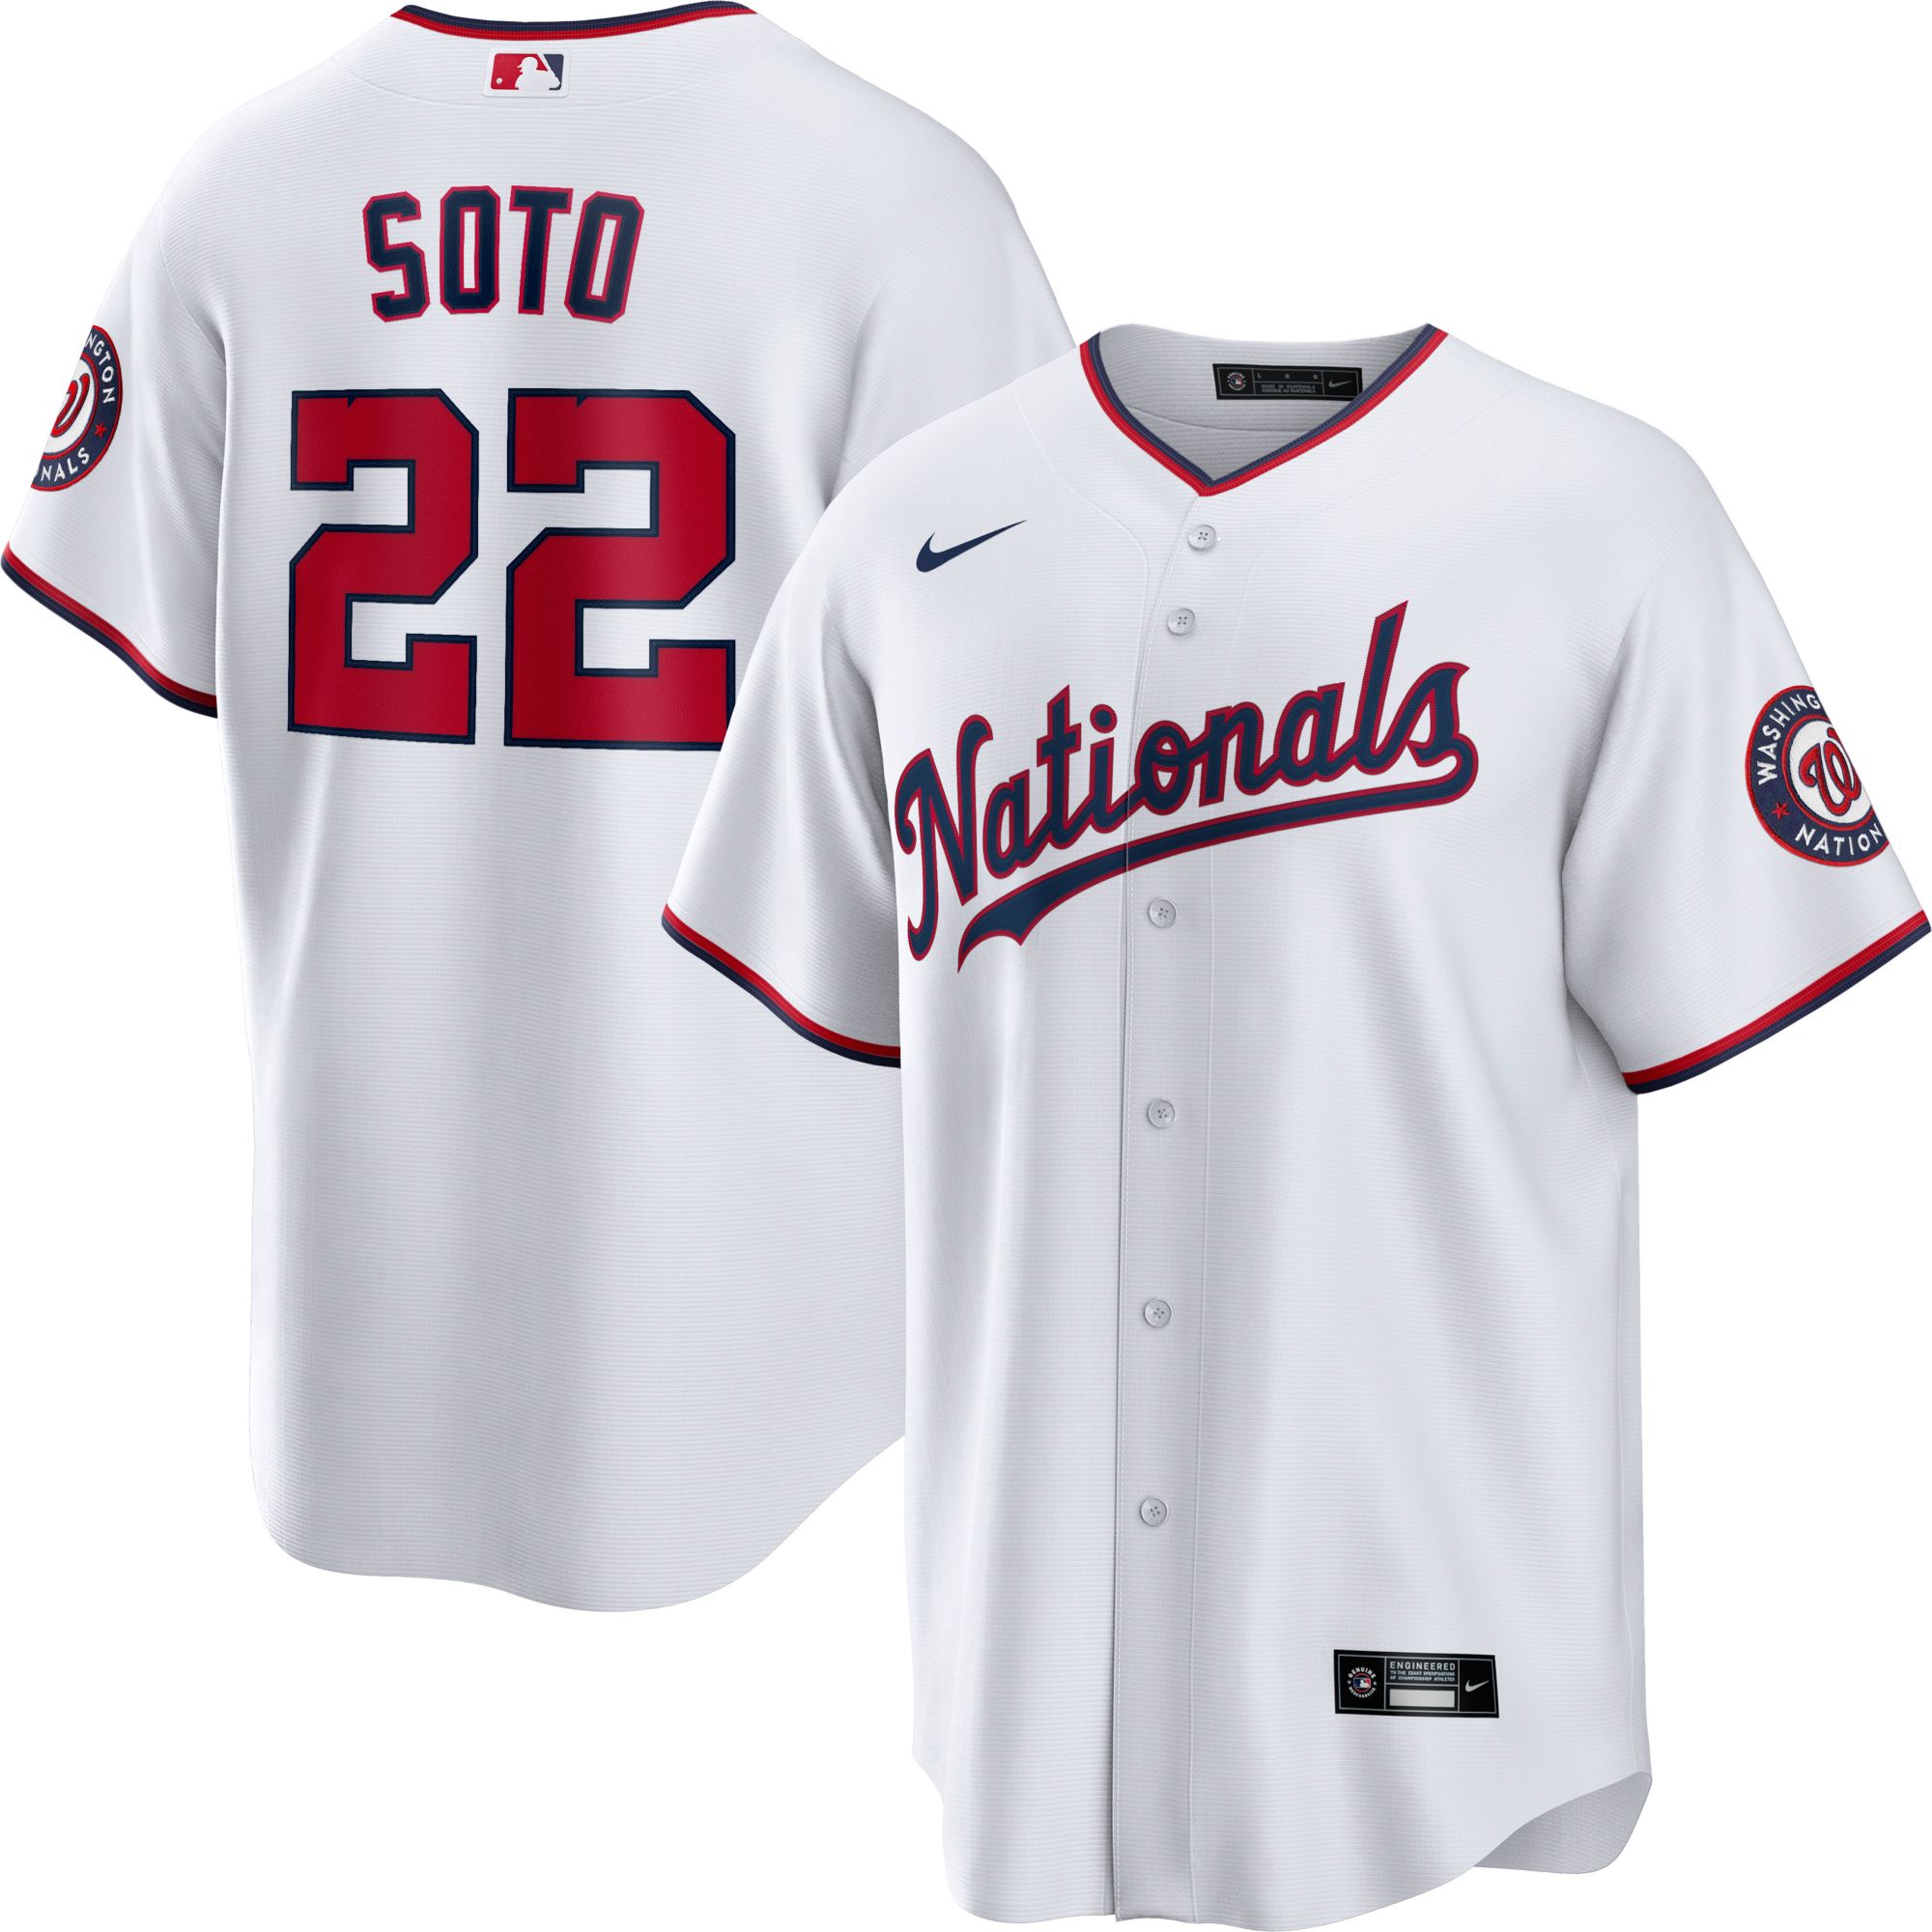 Nike MLB Juan Soto #22 Washington Nationals Jersey White Women’s Size XL